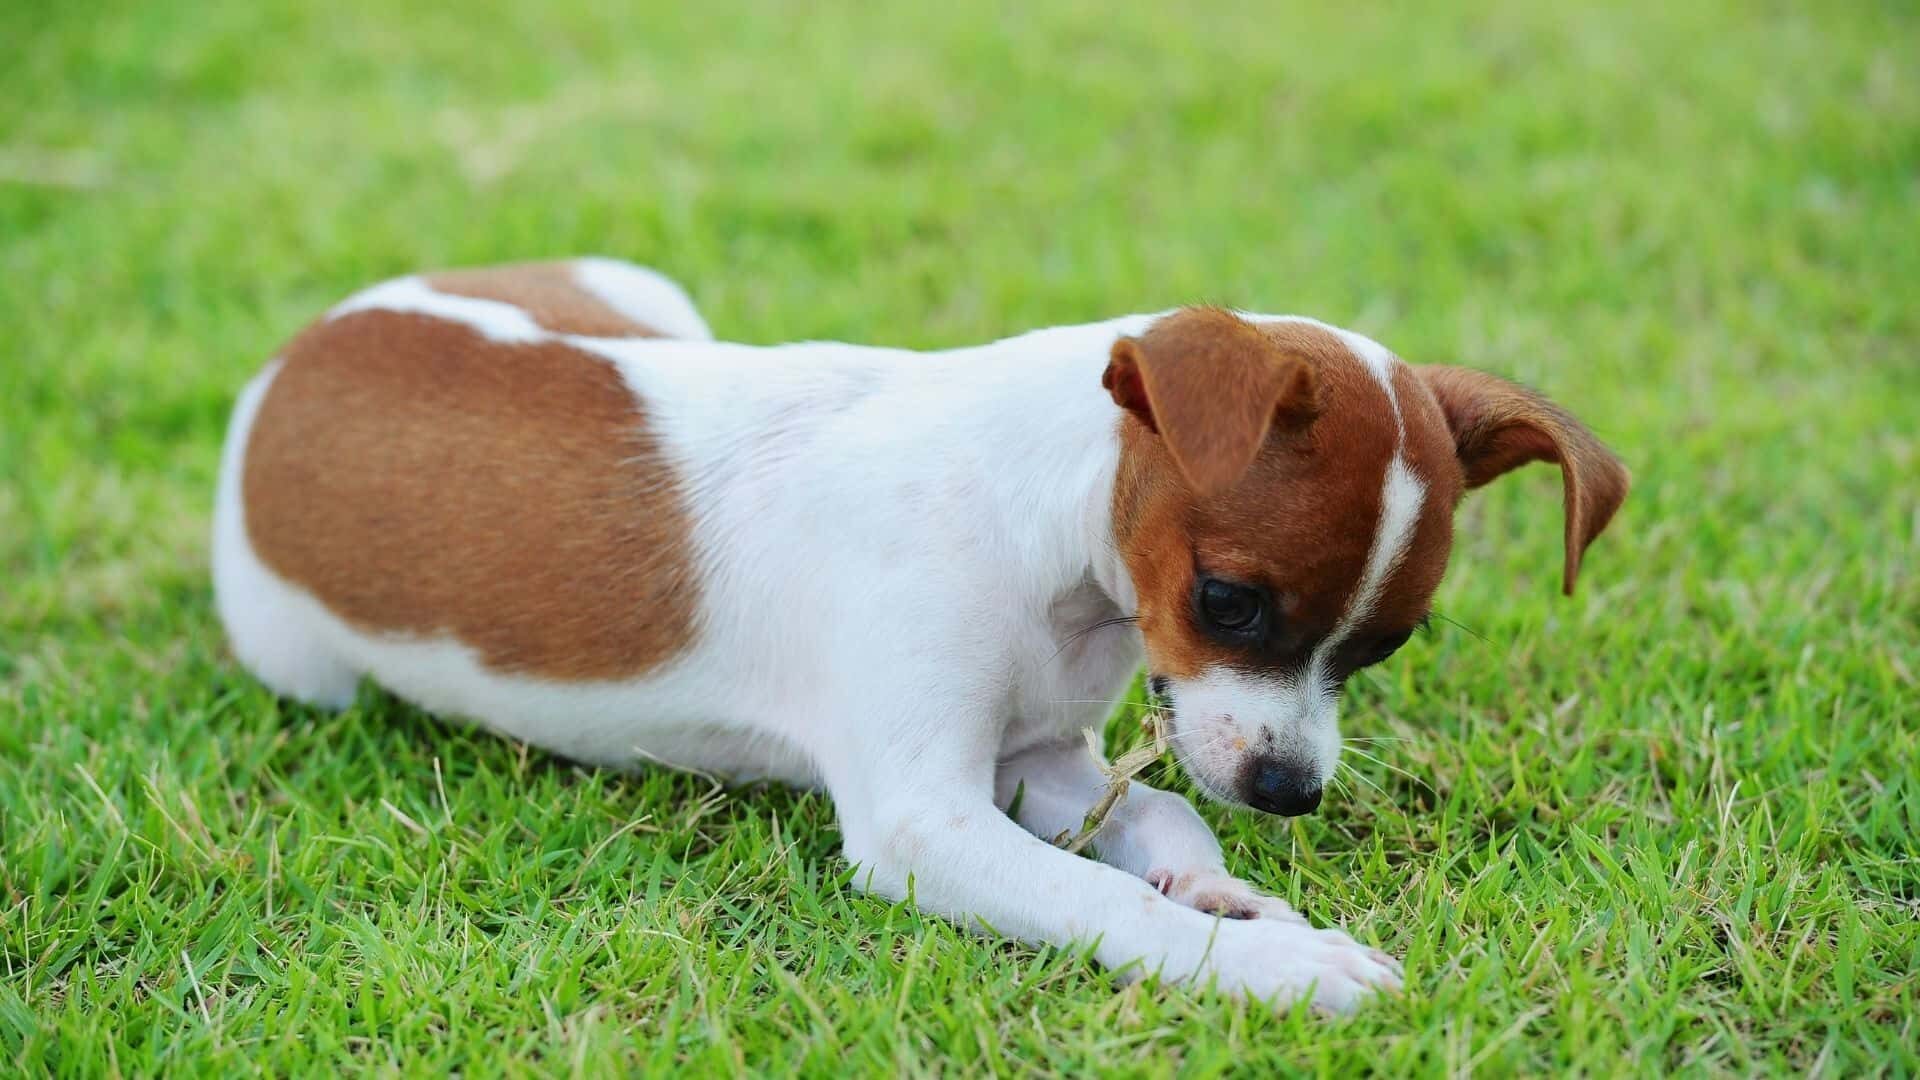 Dog suddenly eating grass like crazy